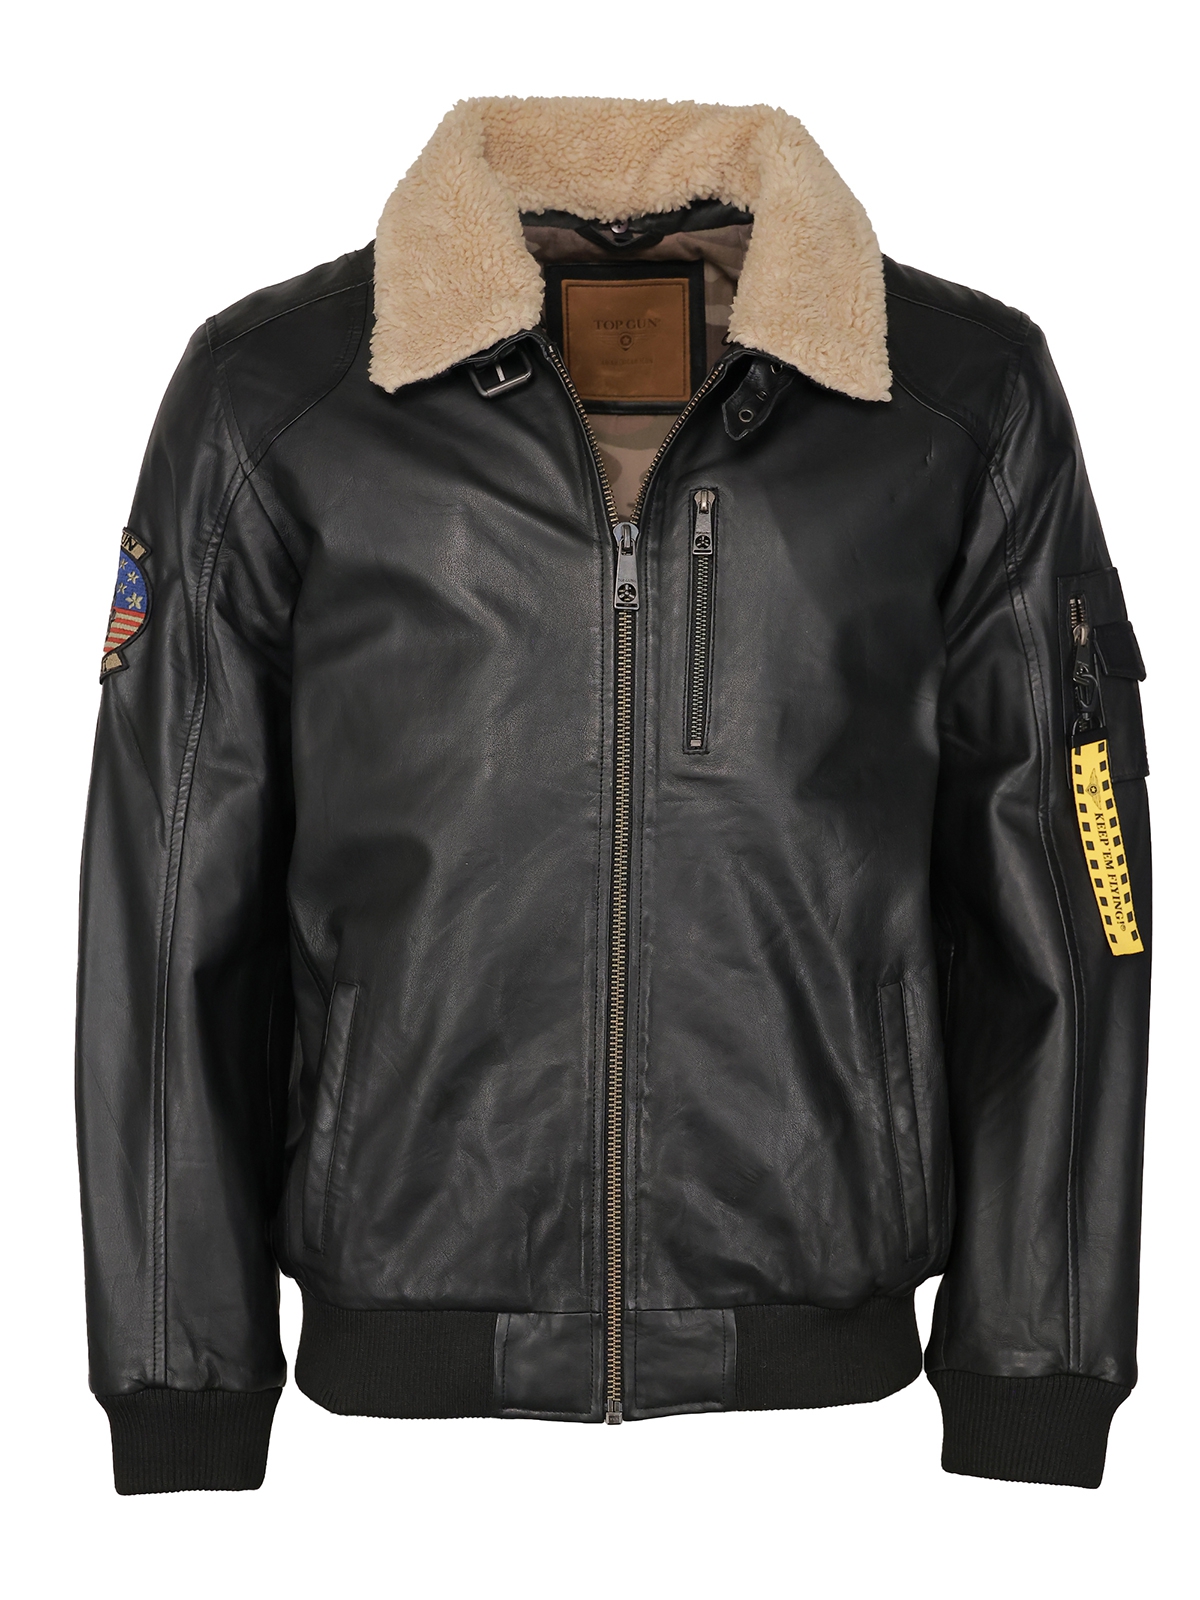 TOP GUN Rafel - Leather Bomber Jacket, black, size 52 (XL)